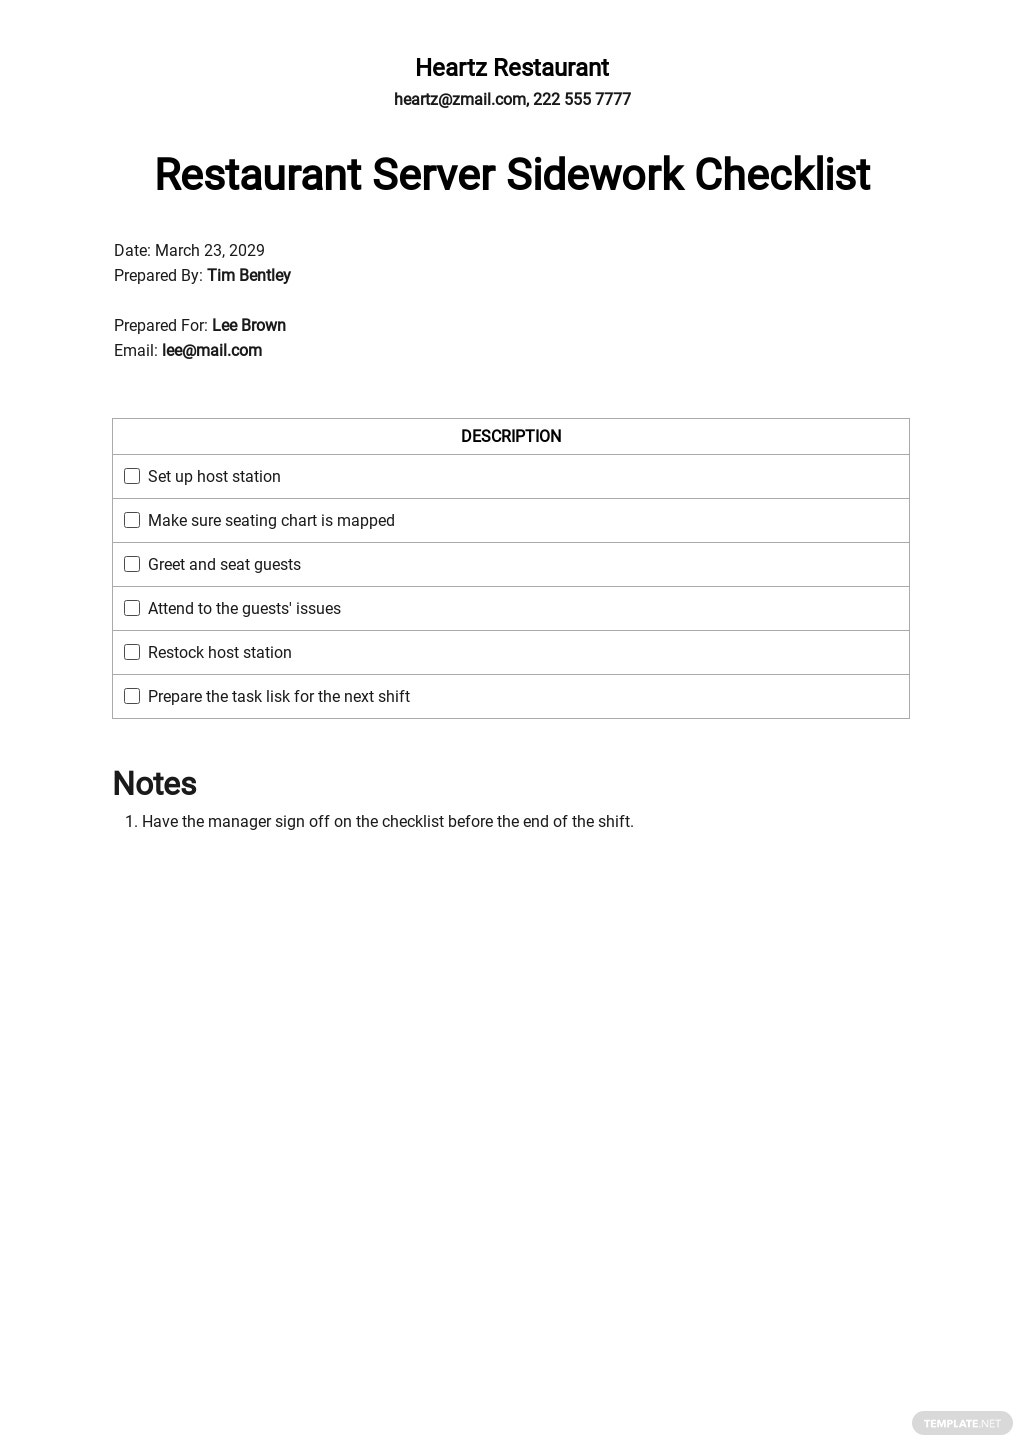 Restaurant Server Sidework Checklist Template [Free PDF] - Google  Within Restaurant Side Work Checklist Template Intended For Restaurant Side Work Checklist Template